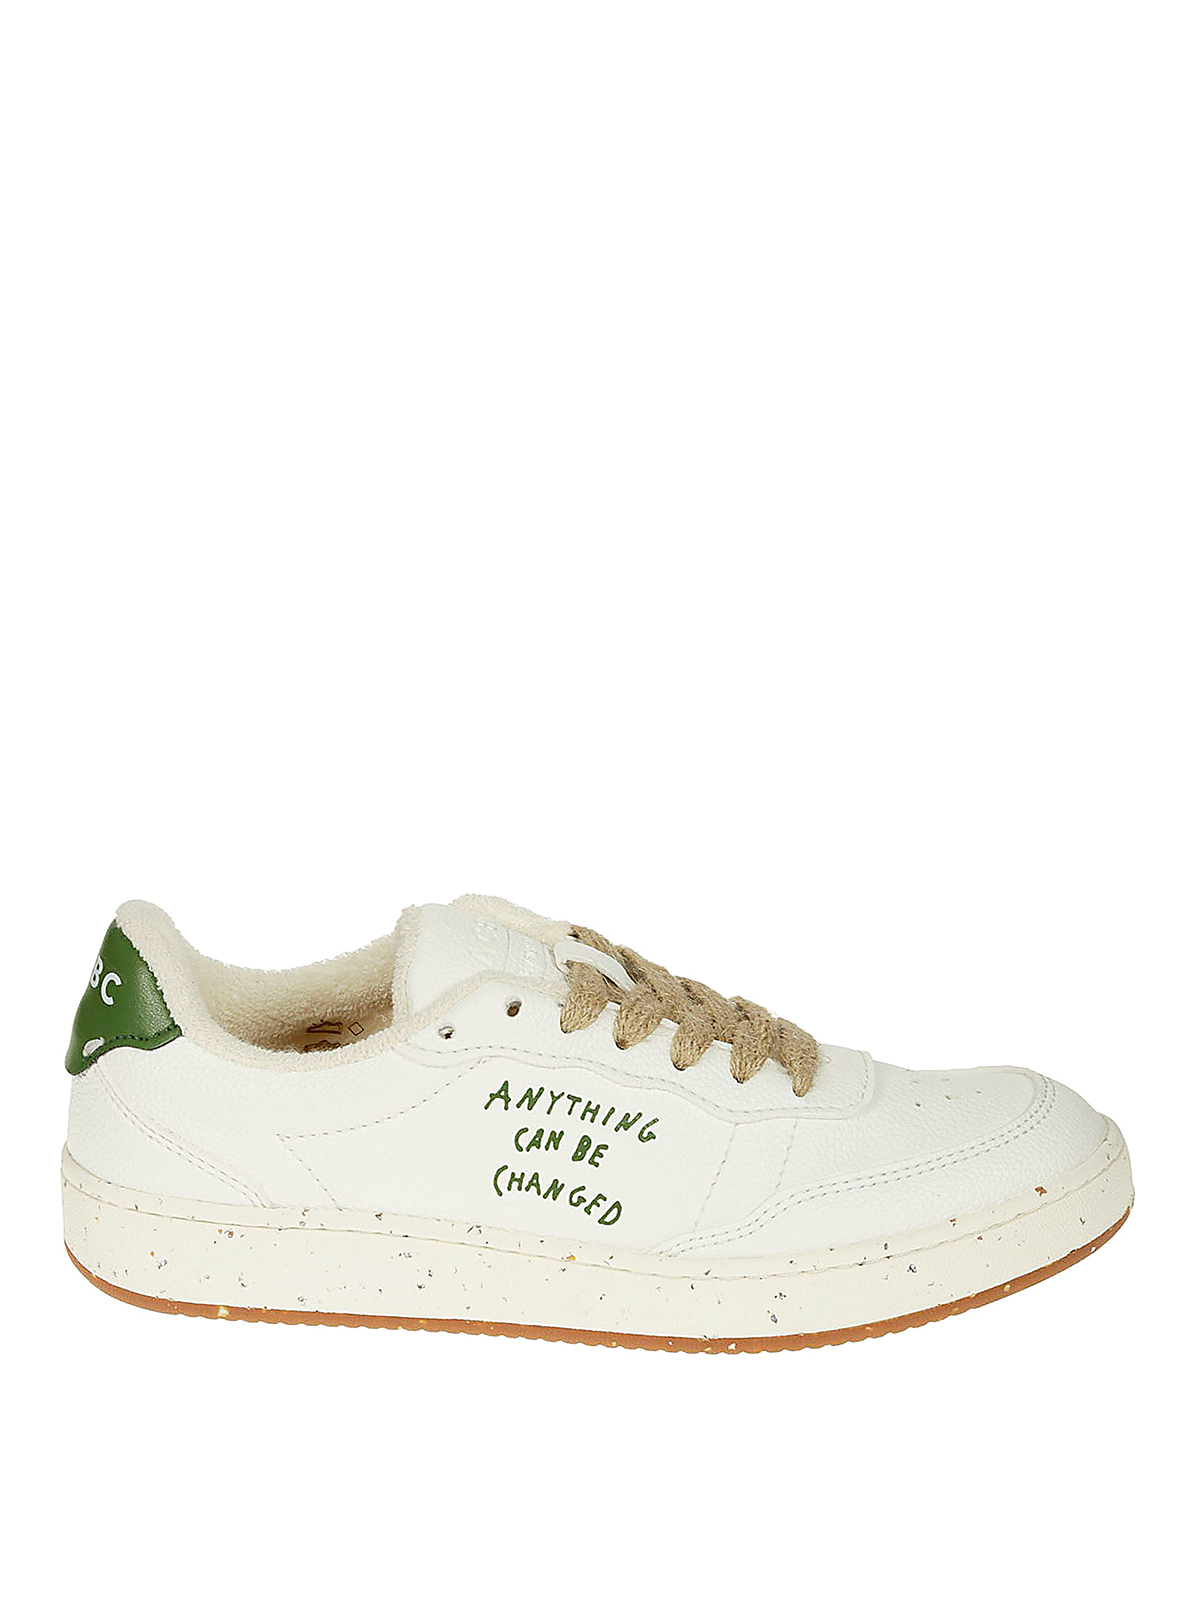 Acbc Evergreen Sneaker White / Green